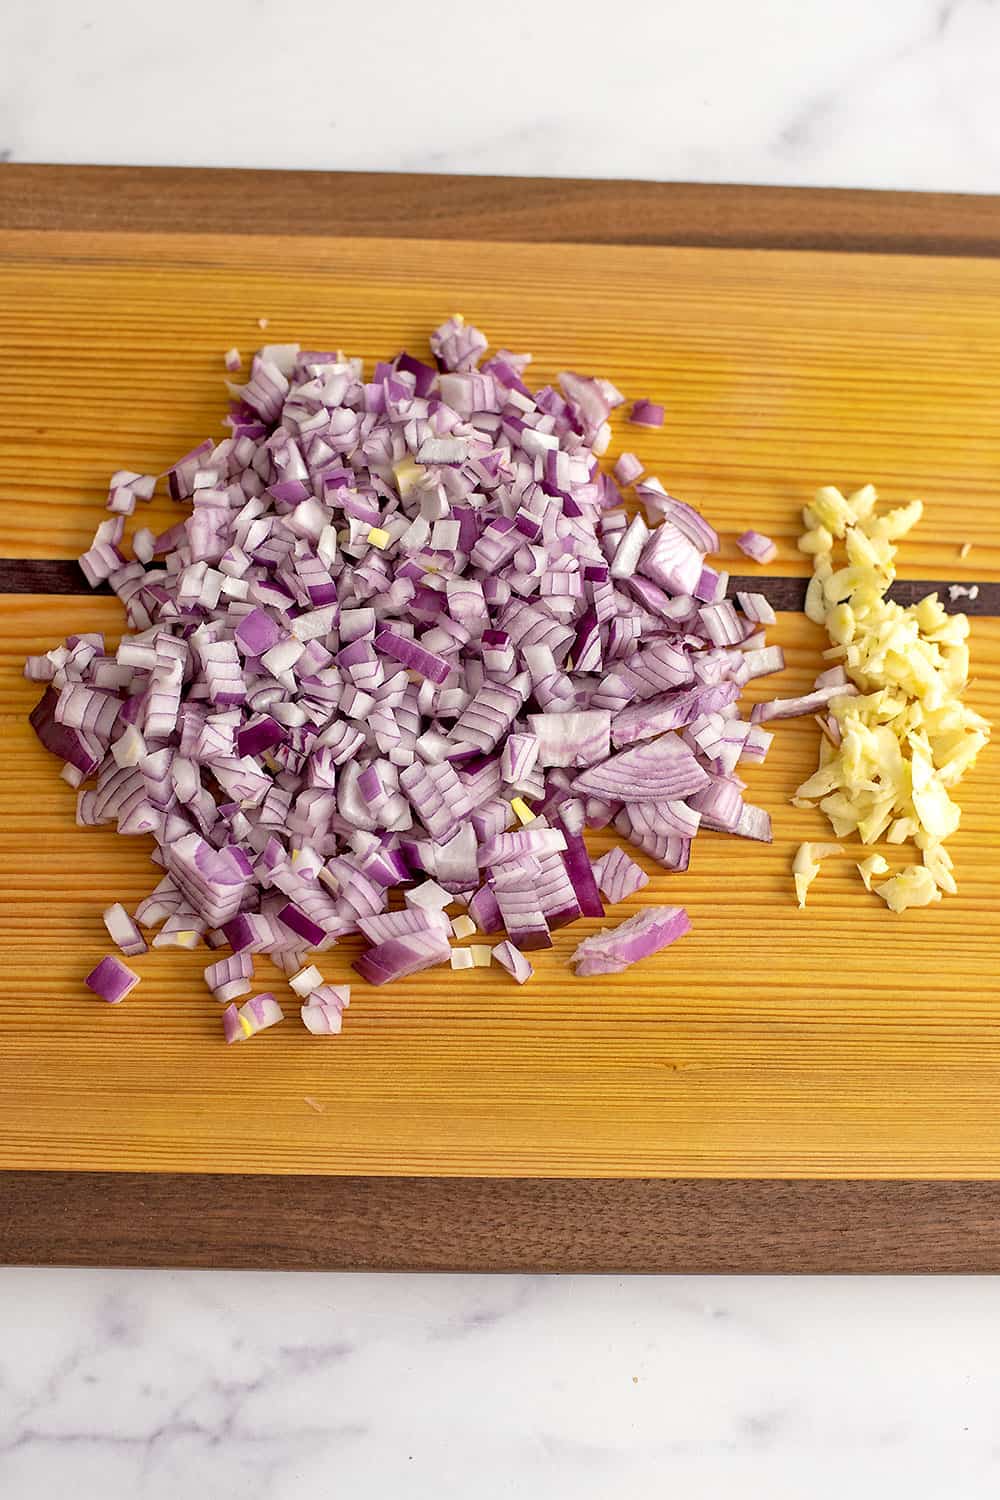 Chopped red onion and sliced garlic on wood cutting board. 